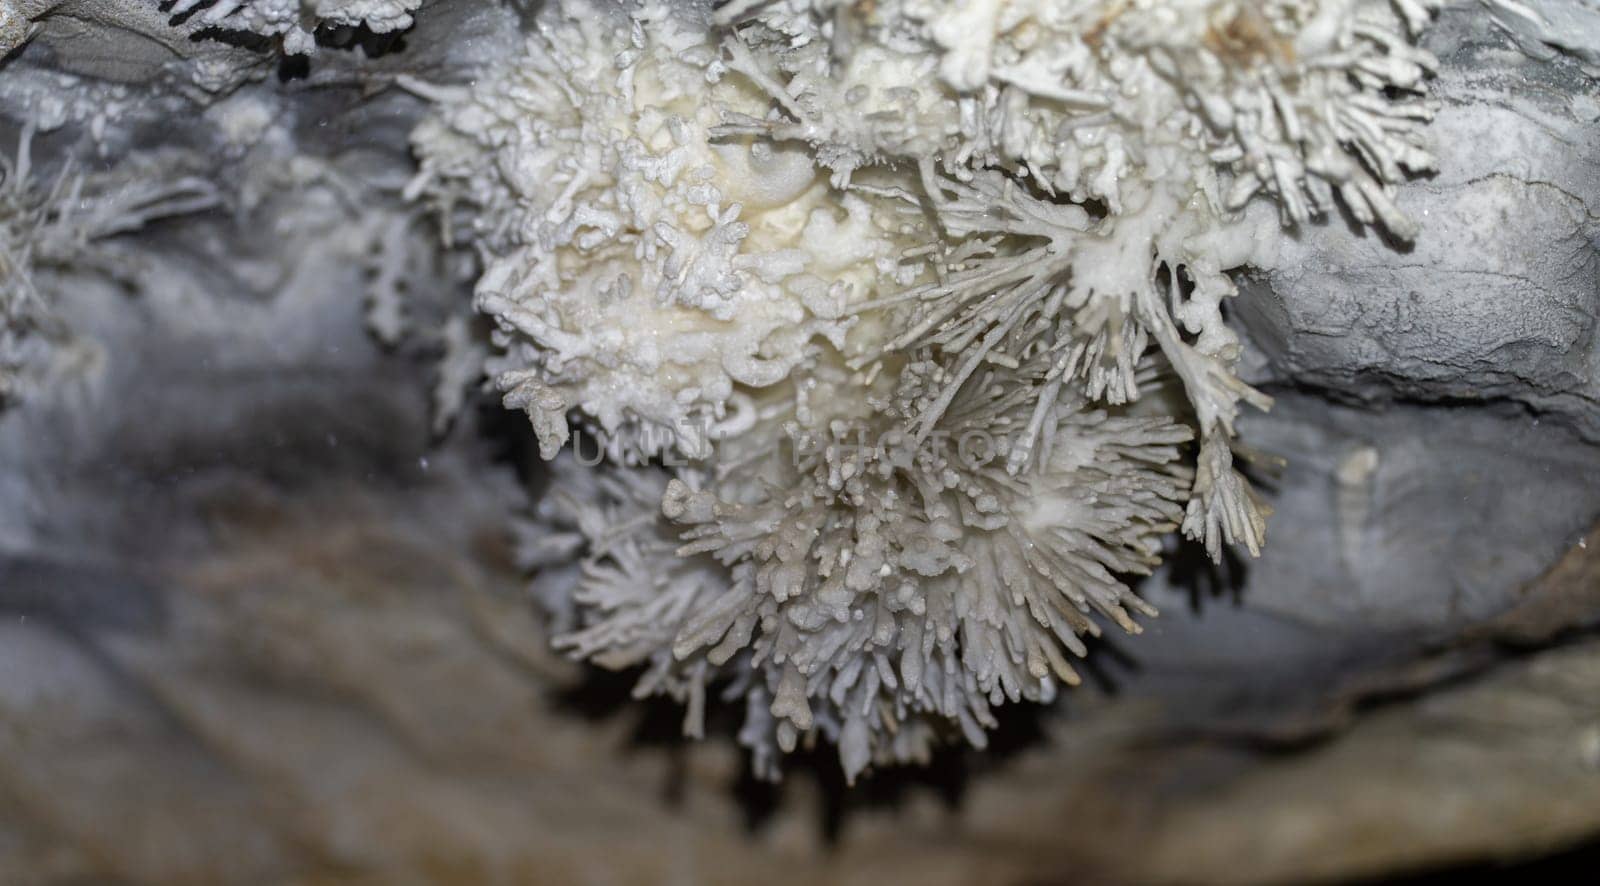 Stunning Calcite Crystals in Underground Cave Environment by FerradalFCG